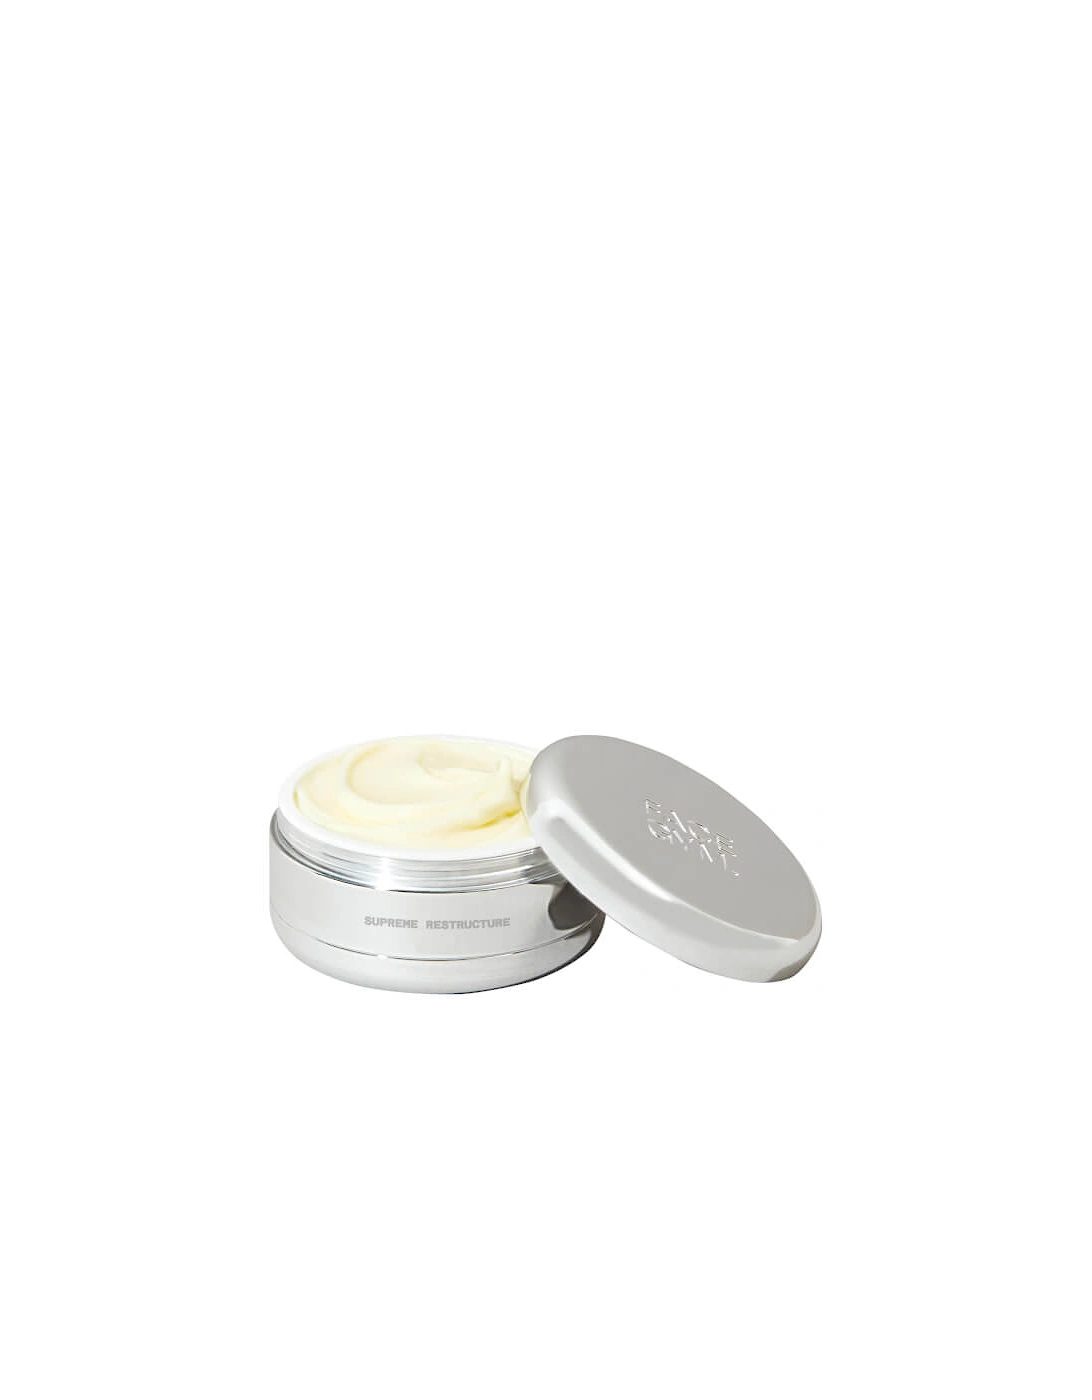 Supreme Restructure Firming EGF Collagen Boosting Cream Refill 50ml, 2 of 1